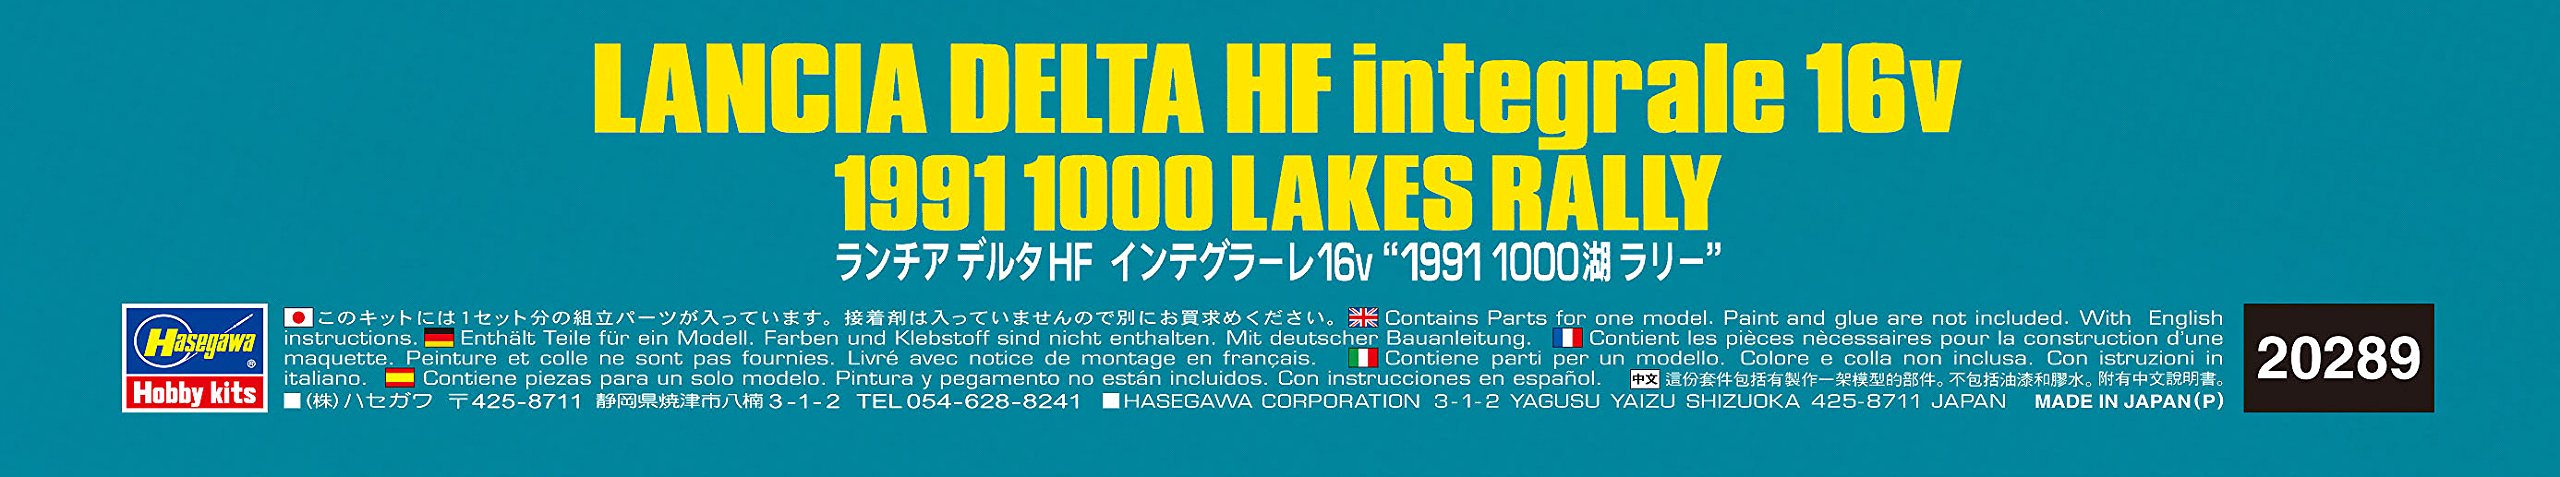 HASEGAWA 20289 Lancia Delta Hf Integrale 16V 1991 1000 Lakes Rally 1/24 Scale Kit